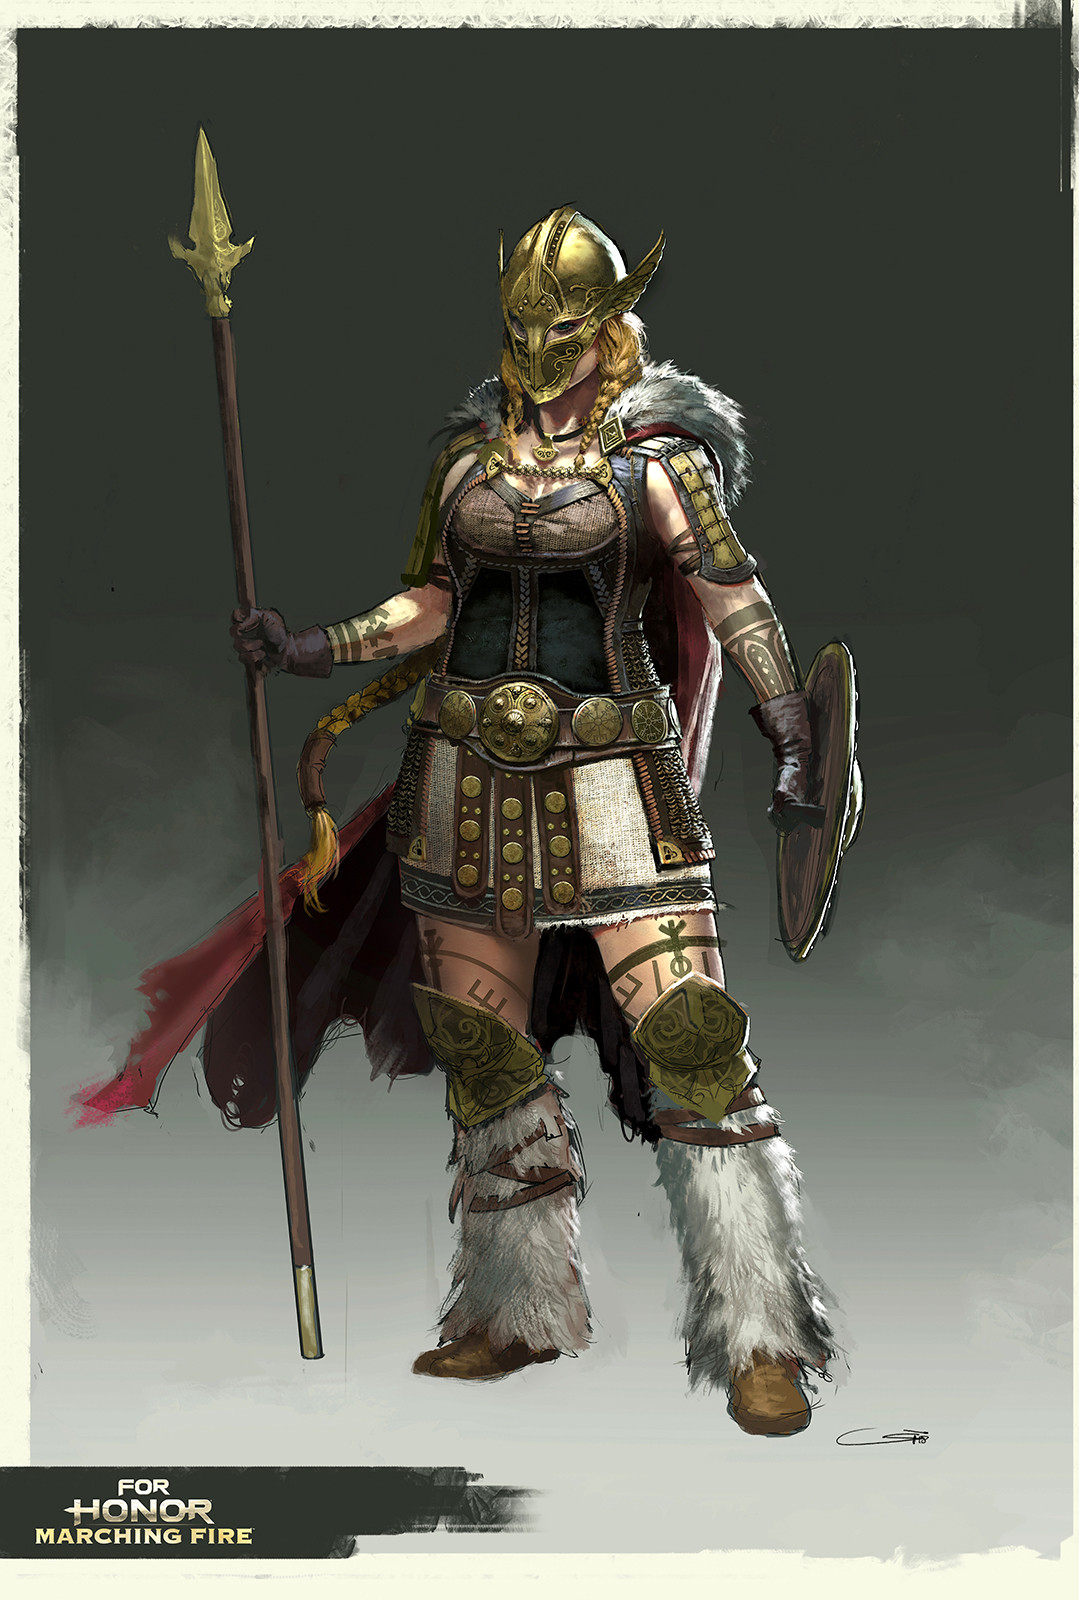 valkyrie for honor armor